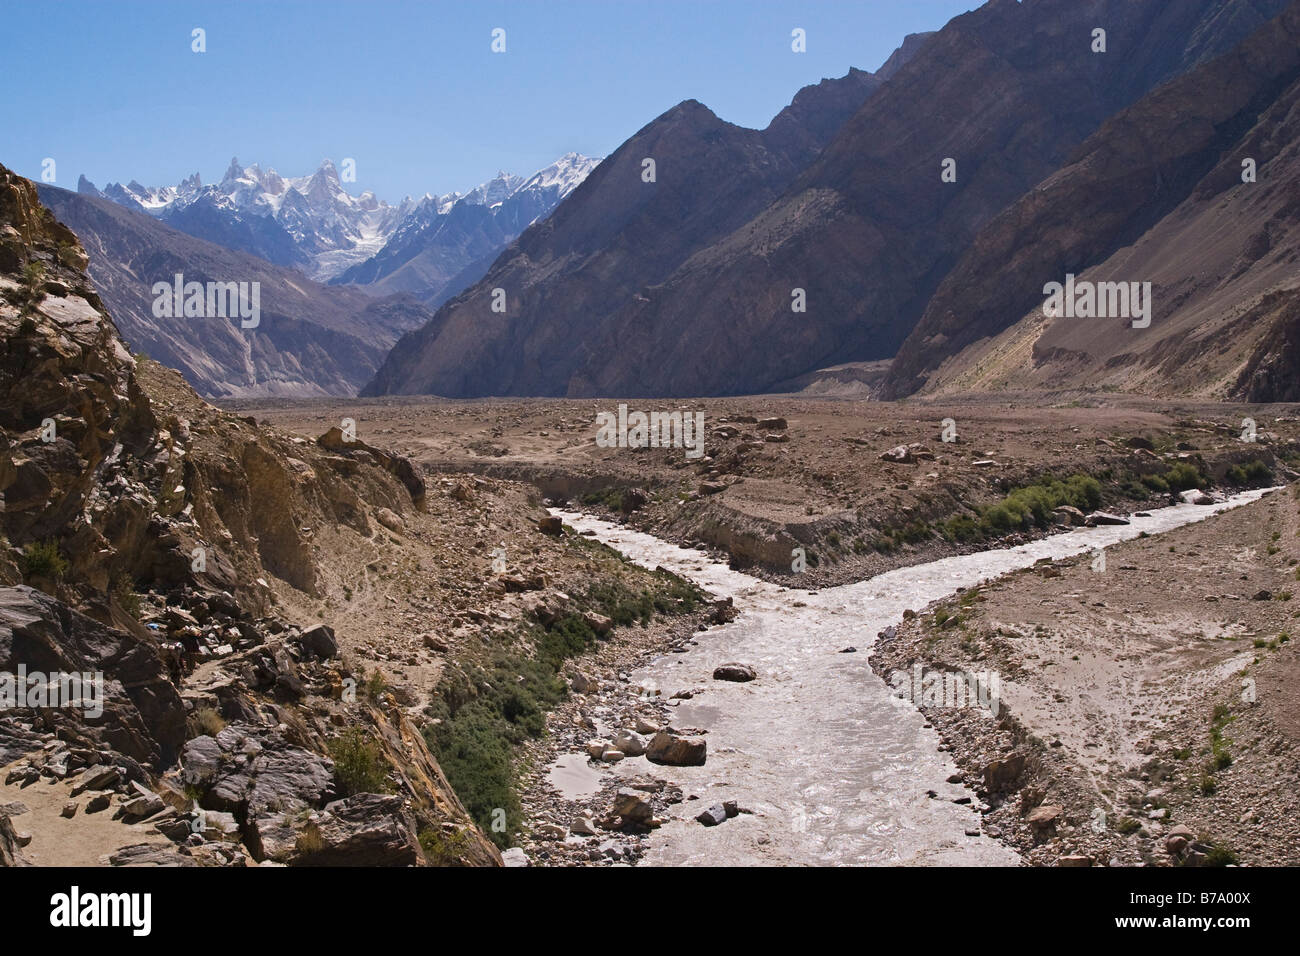 The confluence of the Braldu and Biafo rivers in the Karakoram himalaya in Pakistan Stock Photo